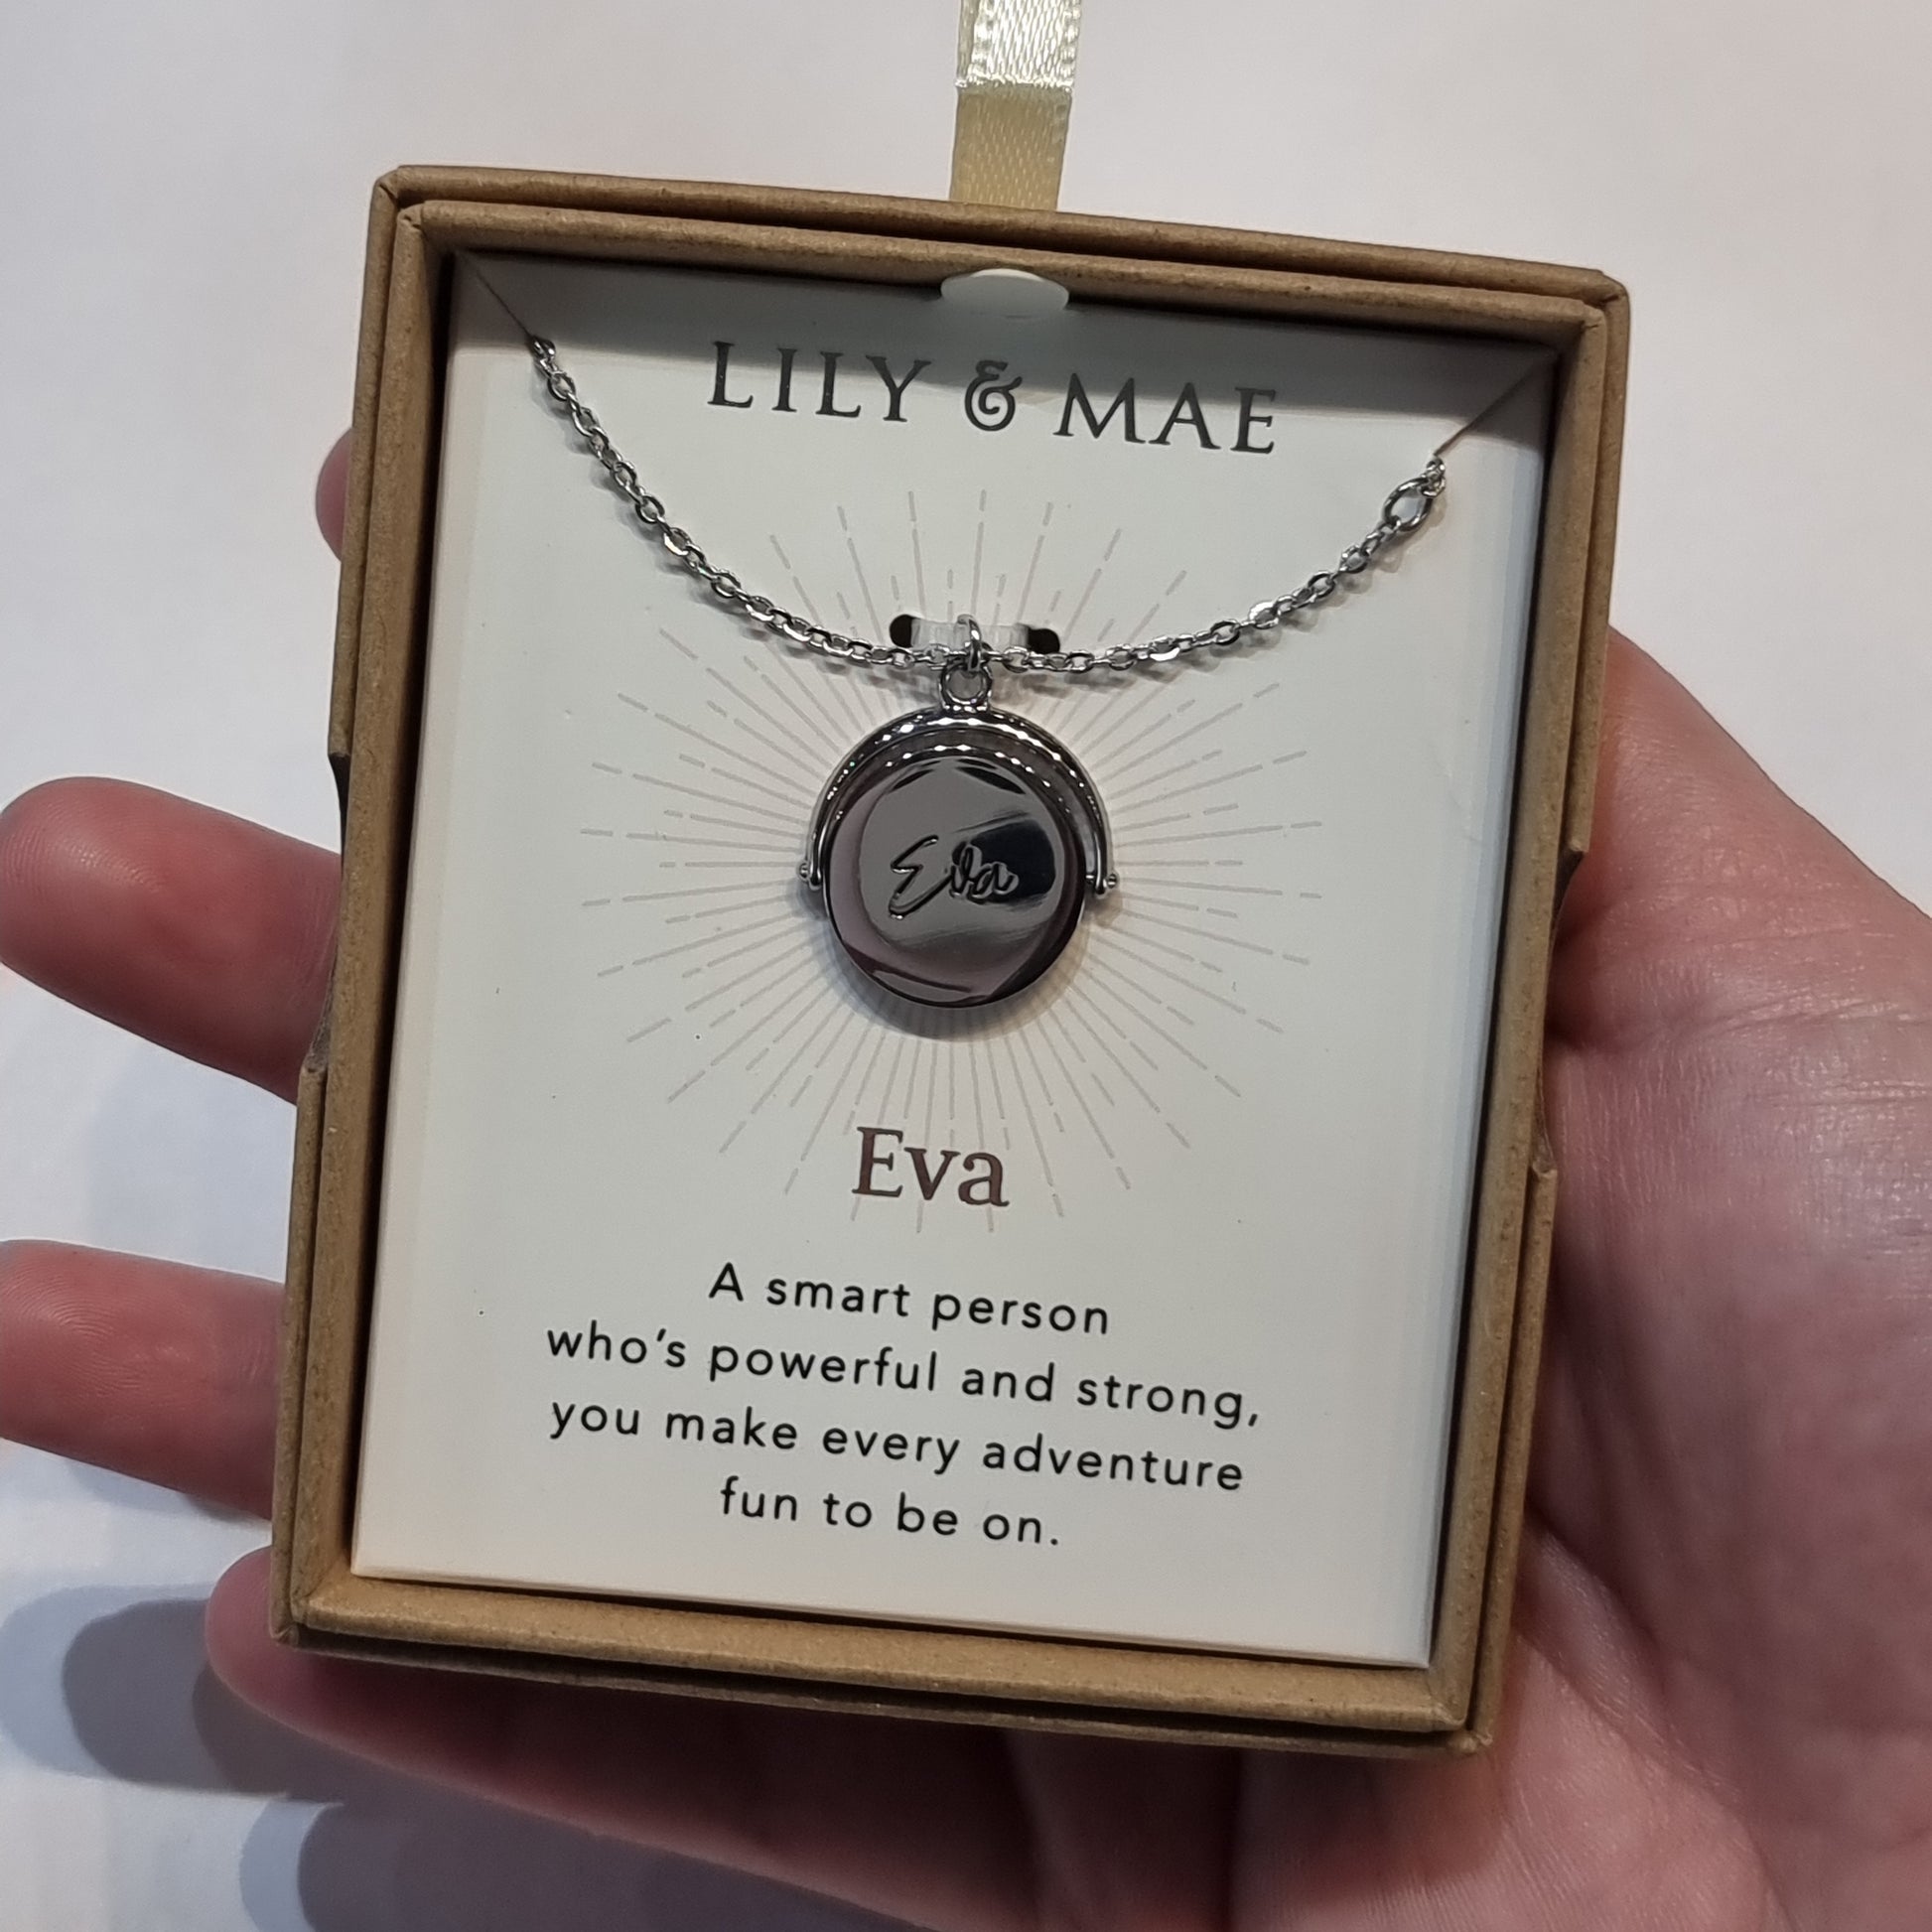 L&M spinning necklace - Eva - Rivendell Shop